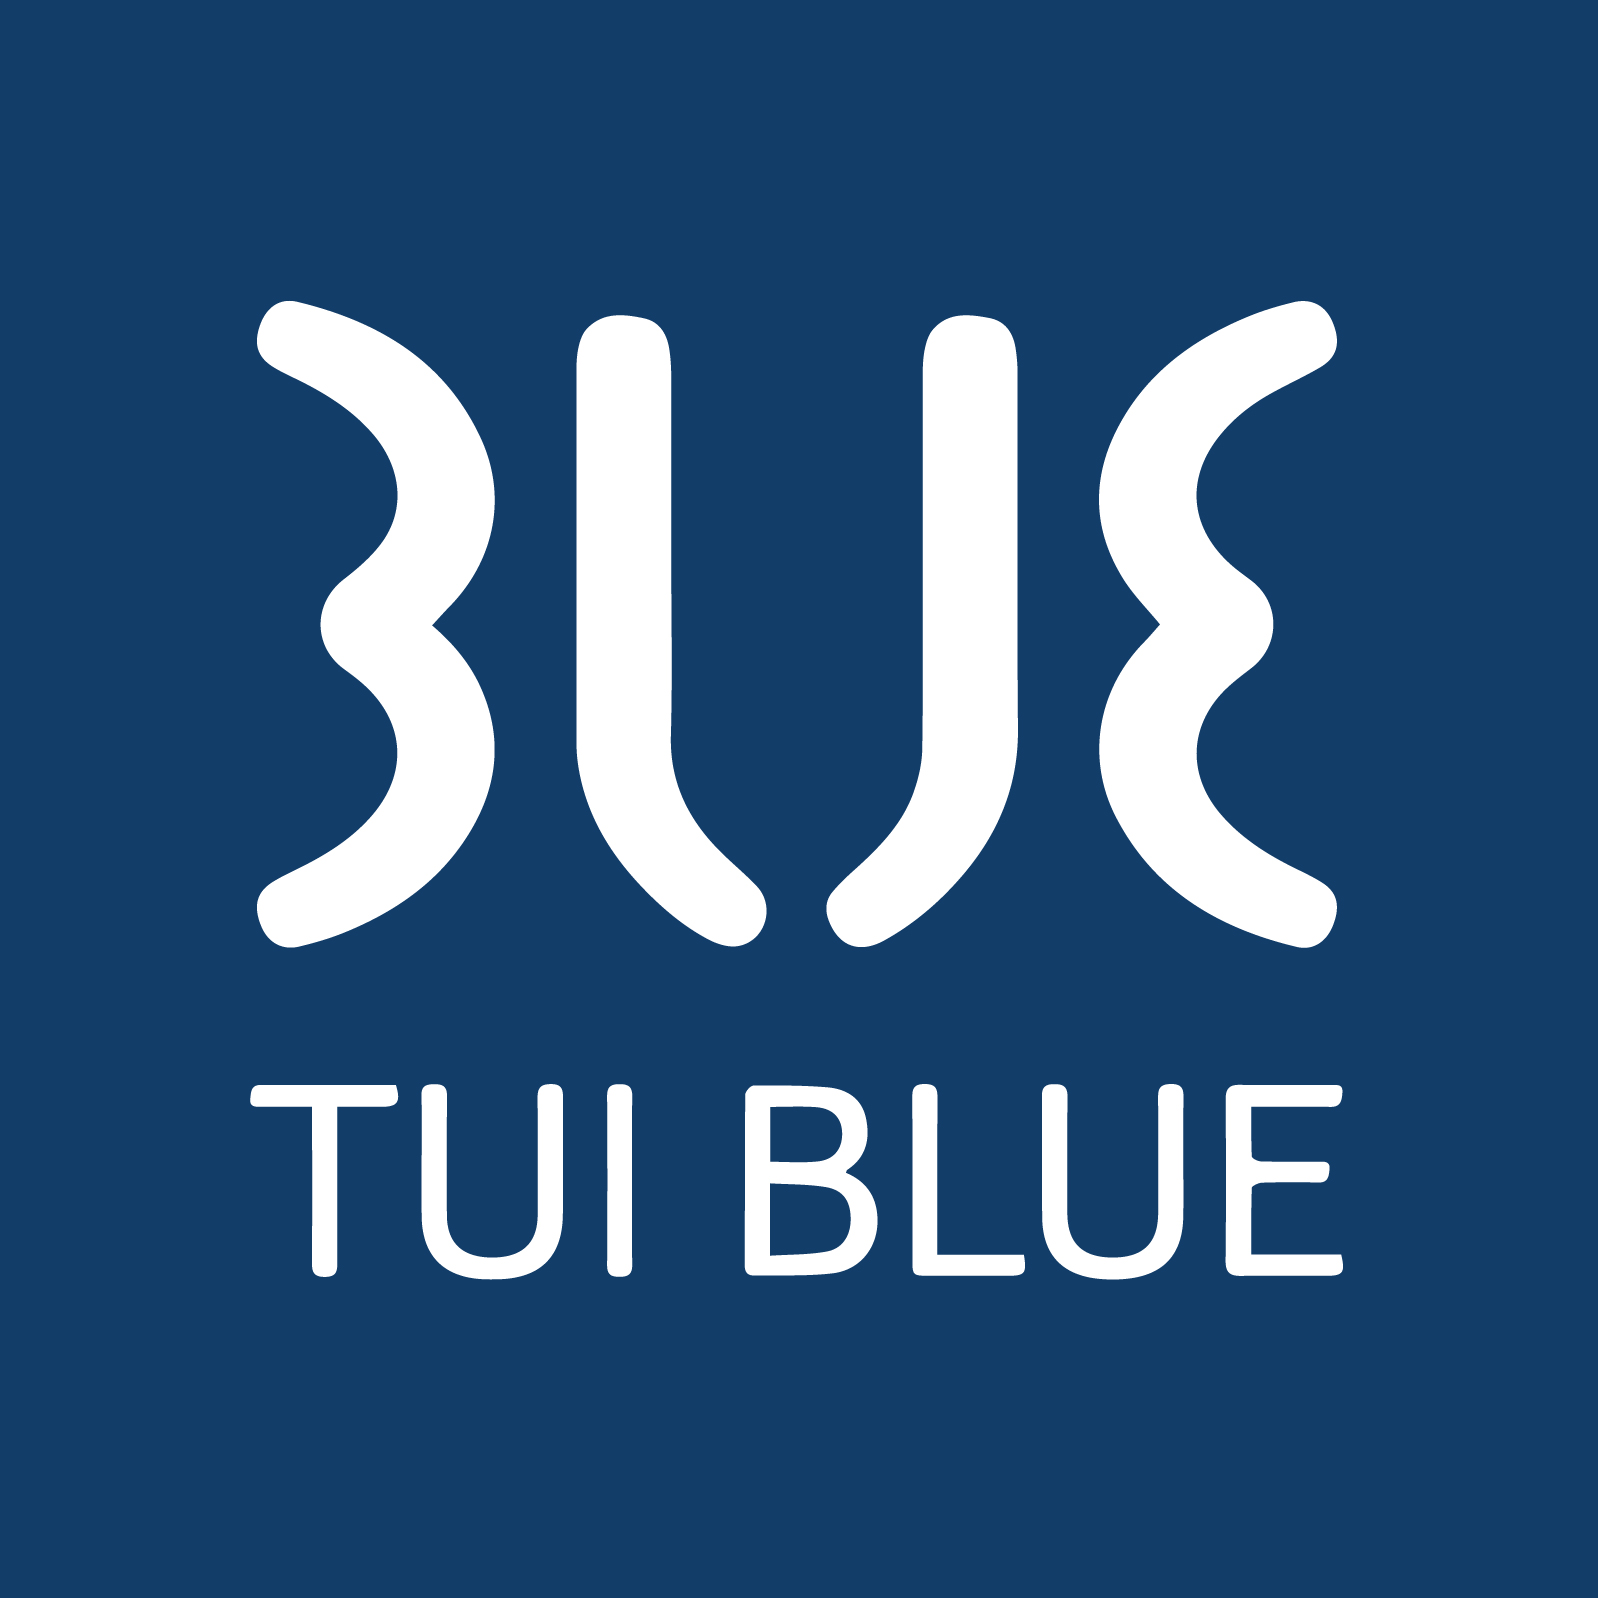 tuiblue-logo